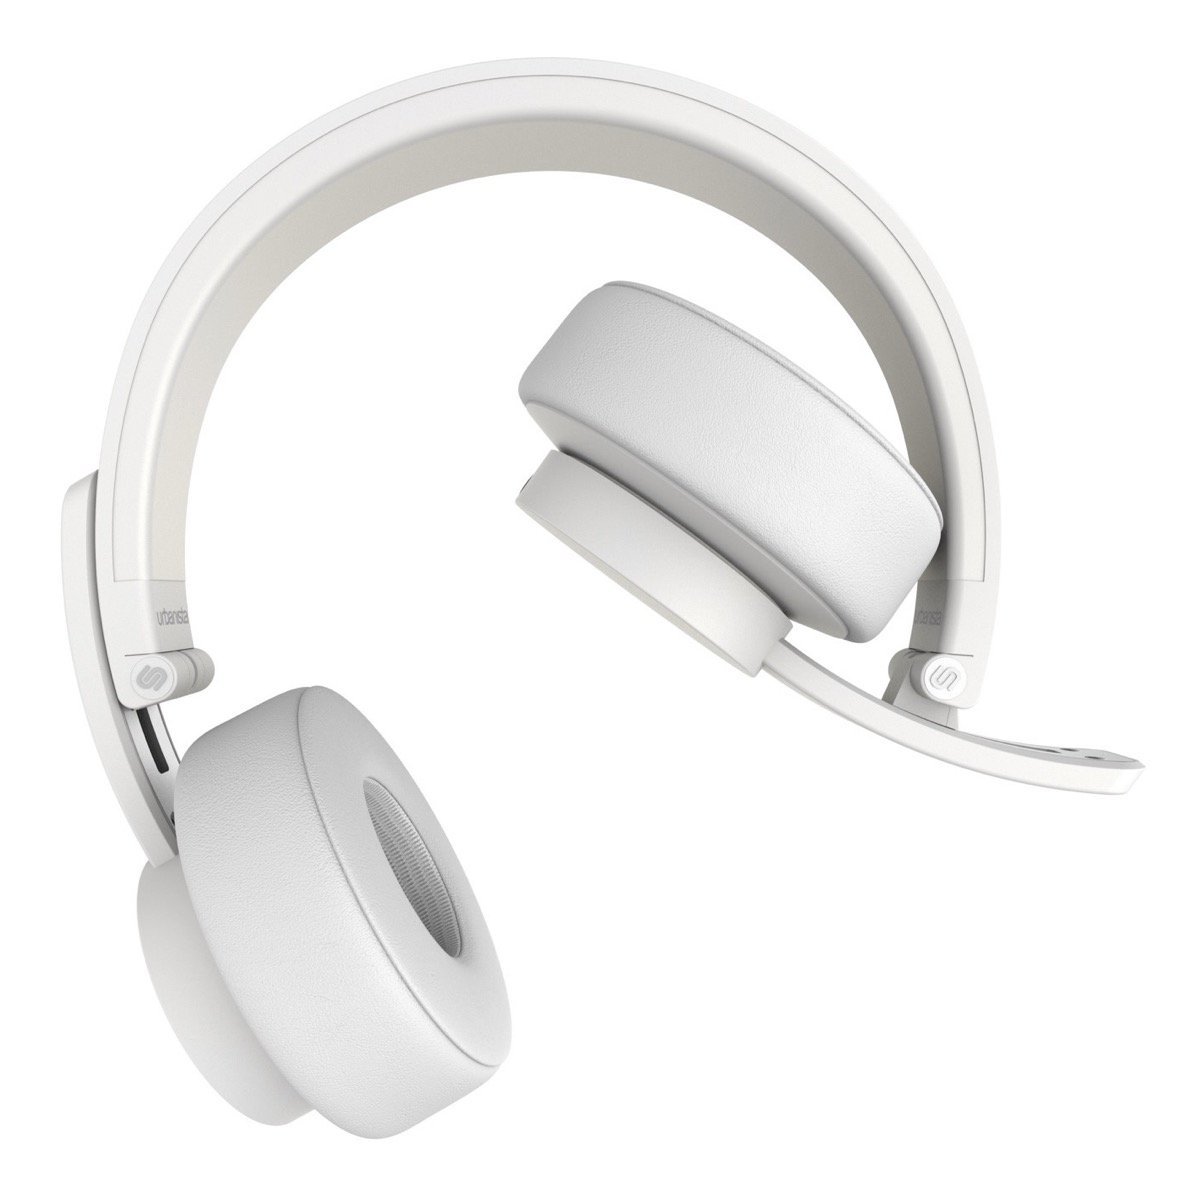 Urbanista Seattle Bluetooth Headphones in White - image 3 of 5